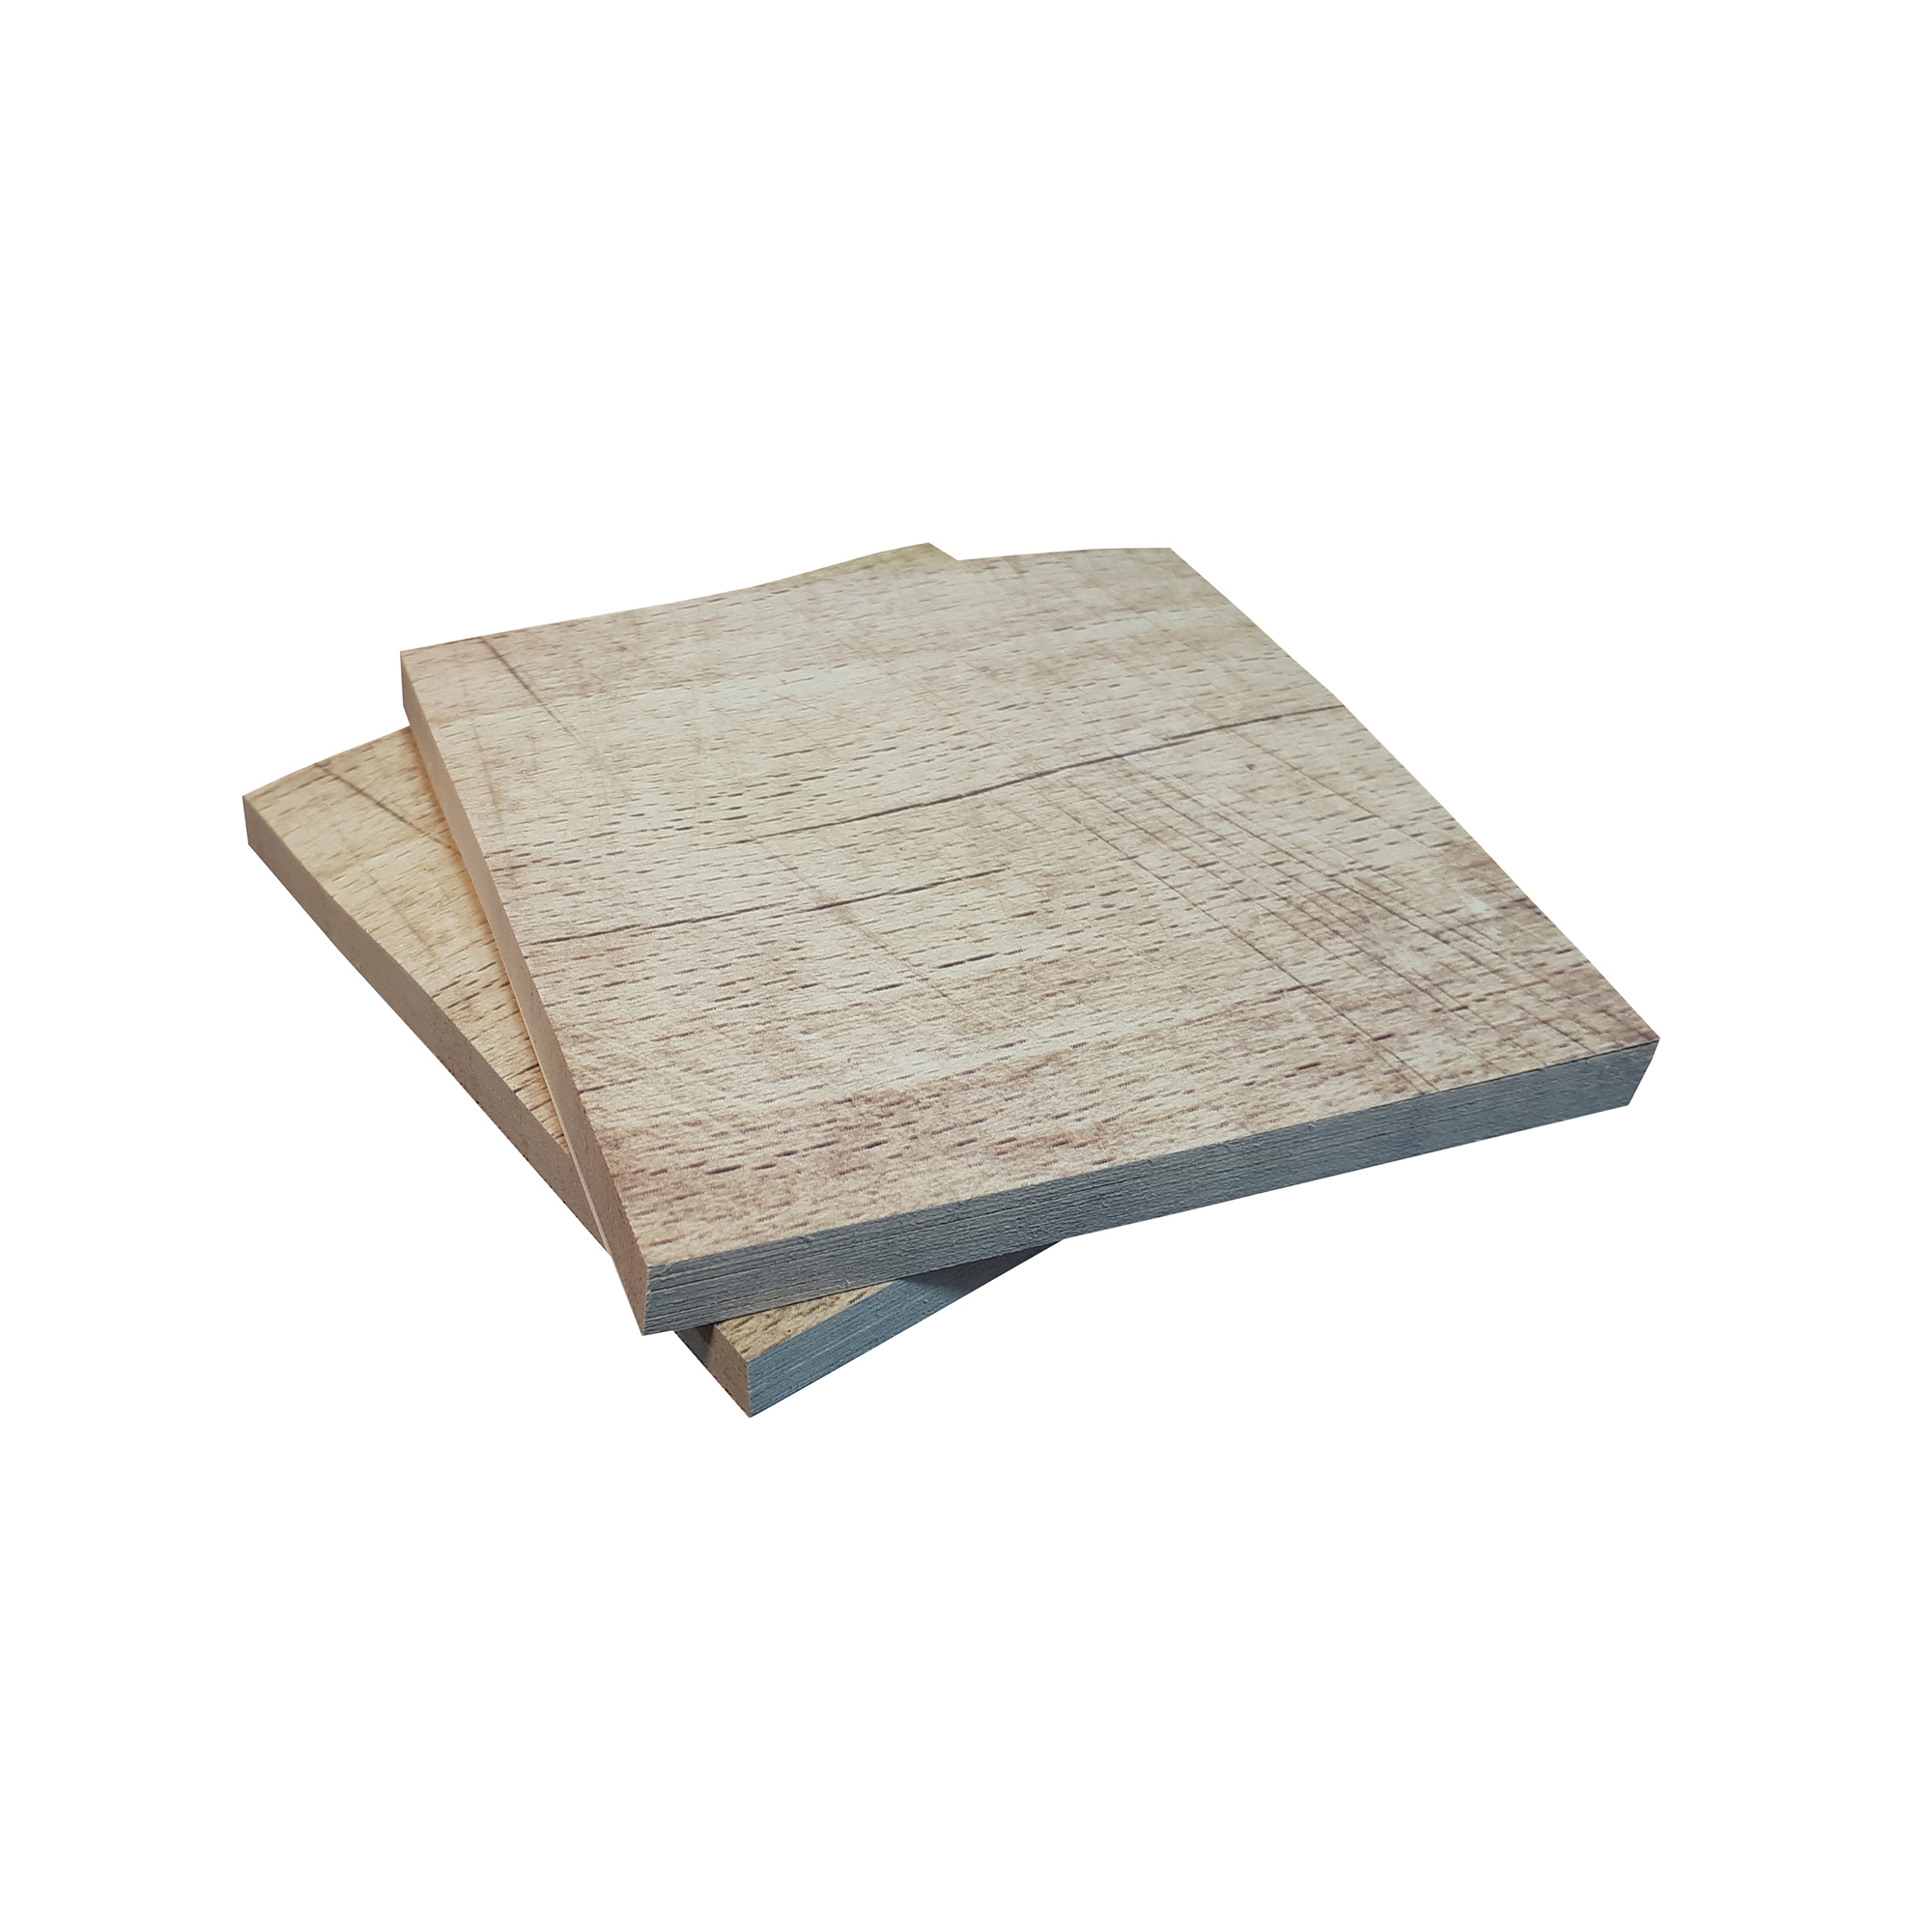 کاغذ یادداشت چسب دار طرح چوب کد BSB-1883 بسته 2 عددی